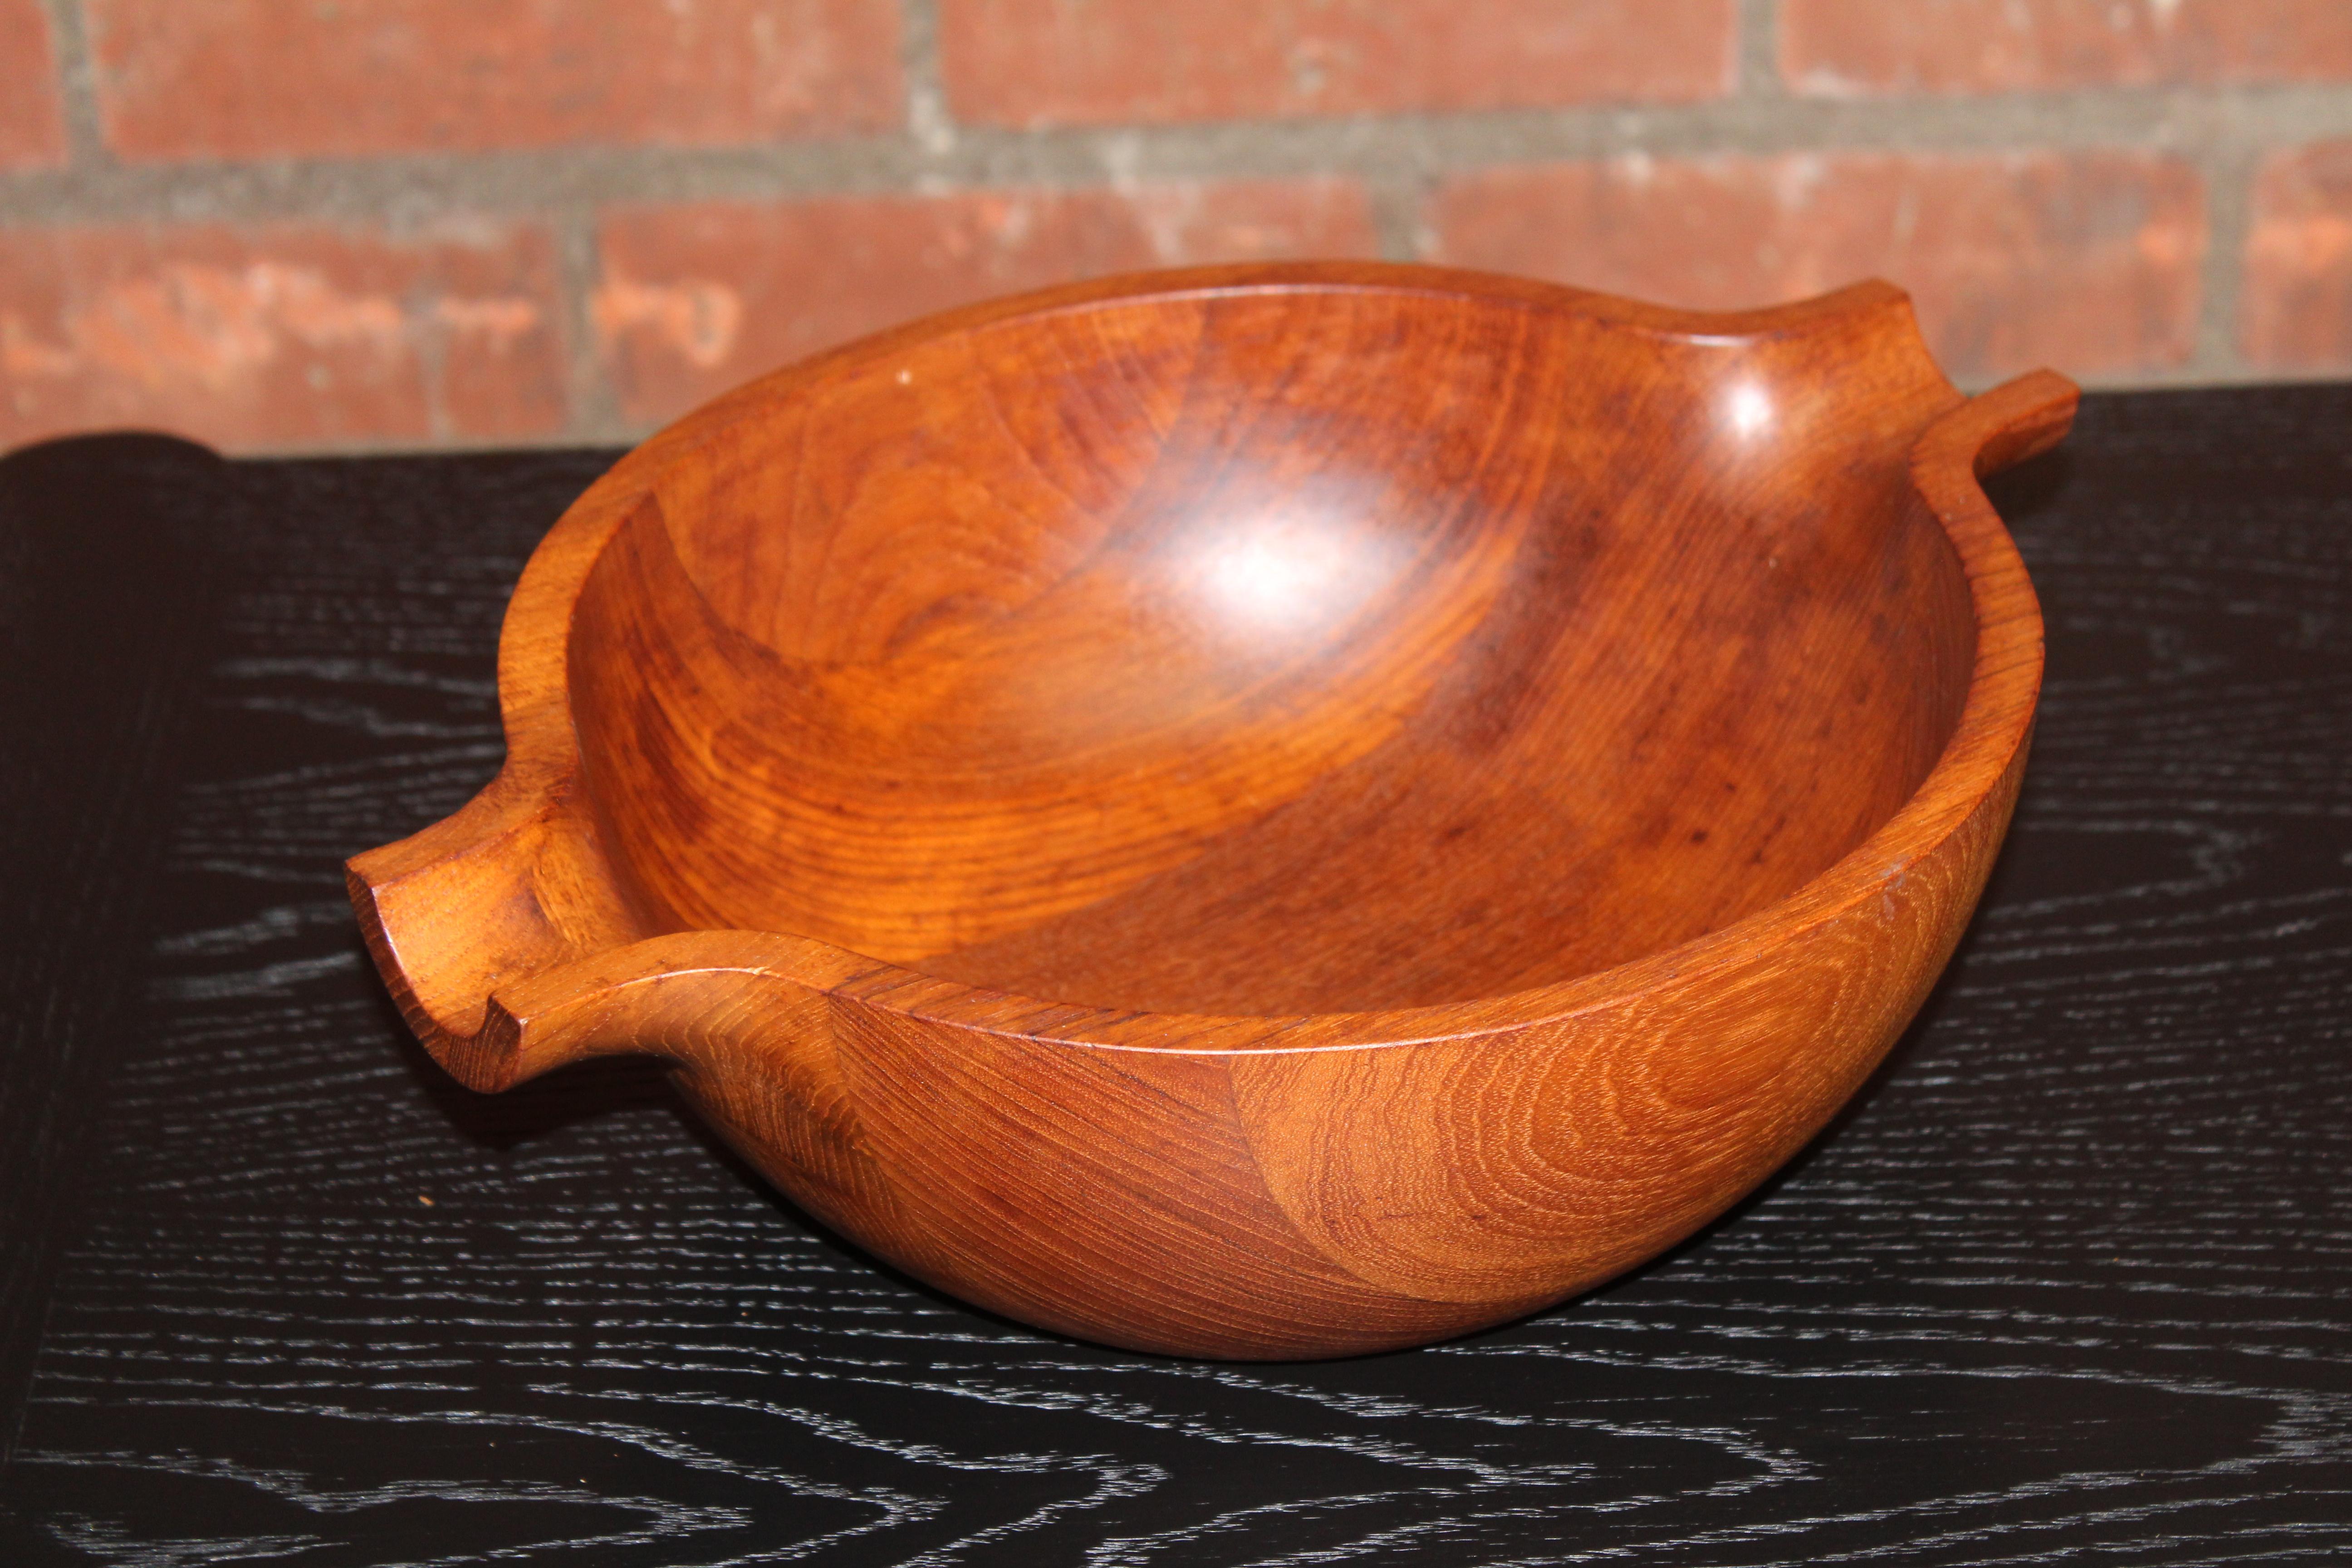 Solid teak serving bowl designed by Henning Koppel for Georg Jensen, made in Denmark.